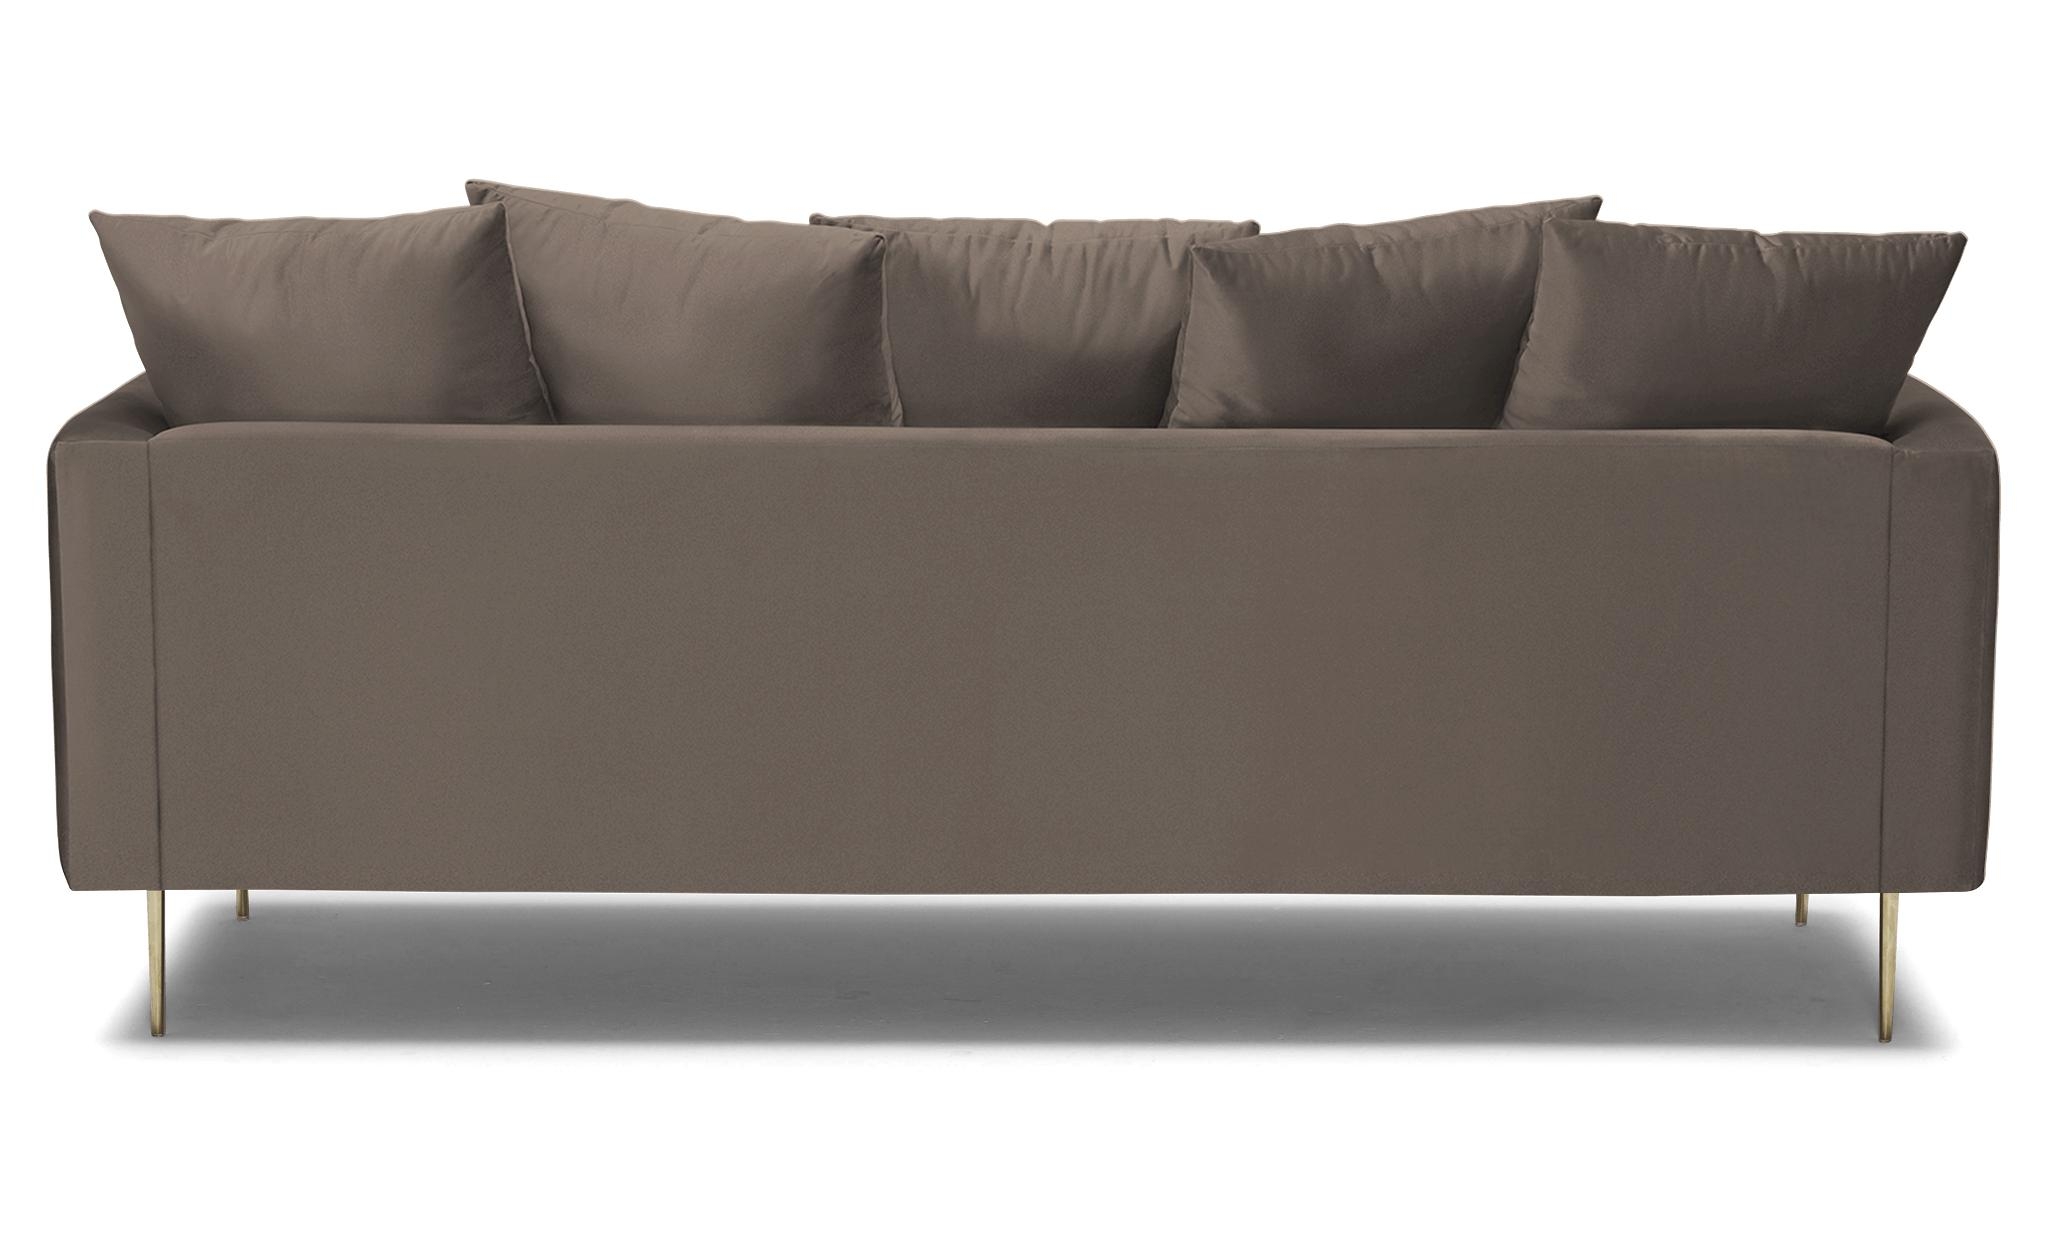 Brown Aime Mid Century Modern Sofa - Dawson Brindle - Image 4